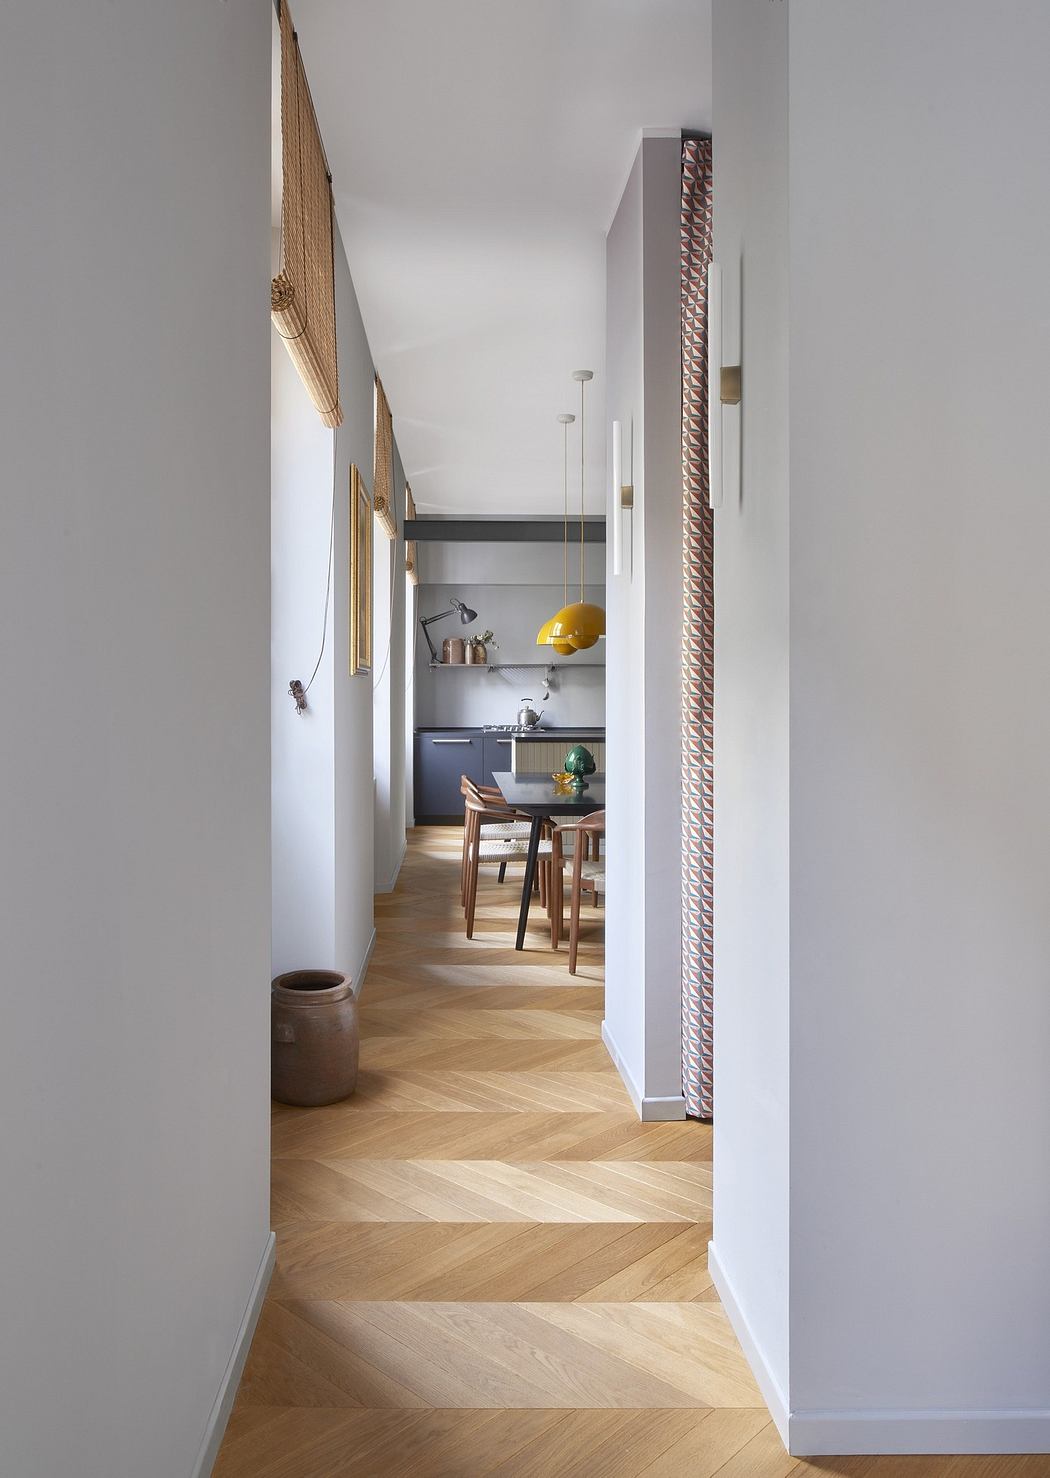 Narrow hallway with herringbone wood floor leading to a kitchen.